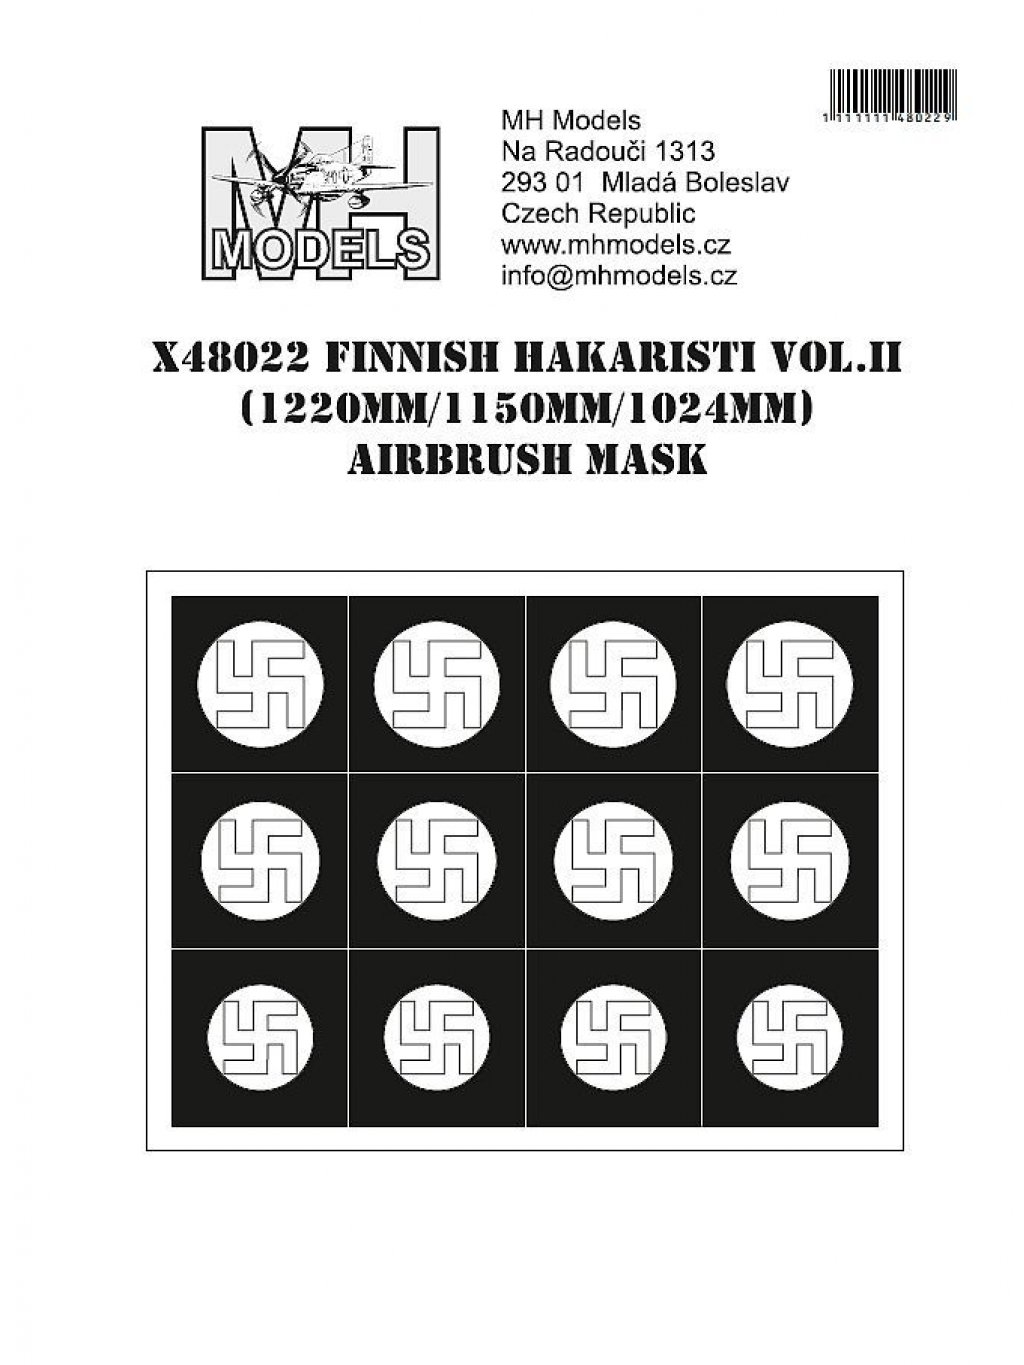 Finnish hakaristi vol.II 1220mm/1150mm/1024mm airbrush mask